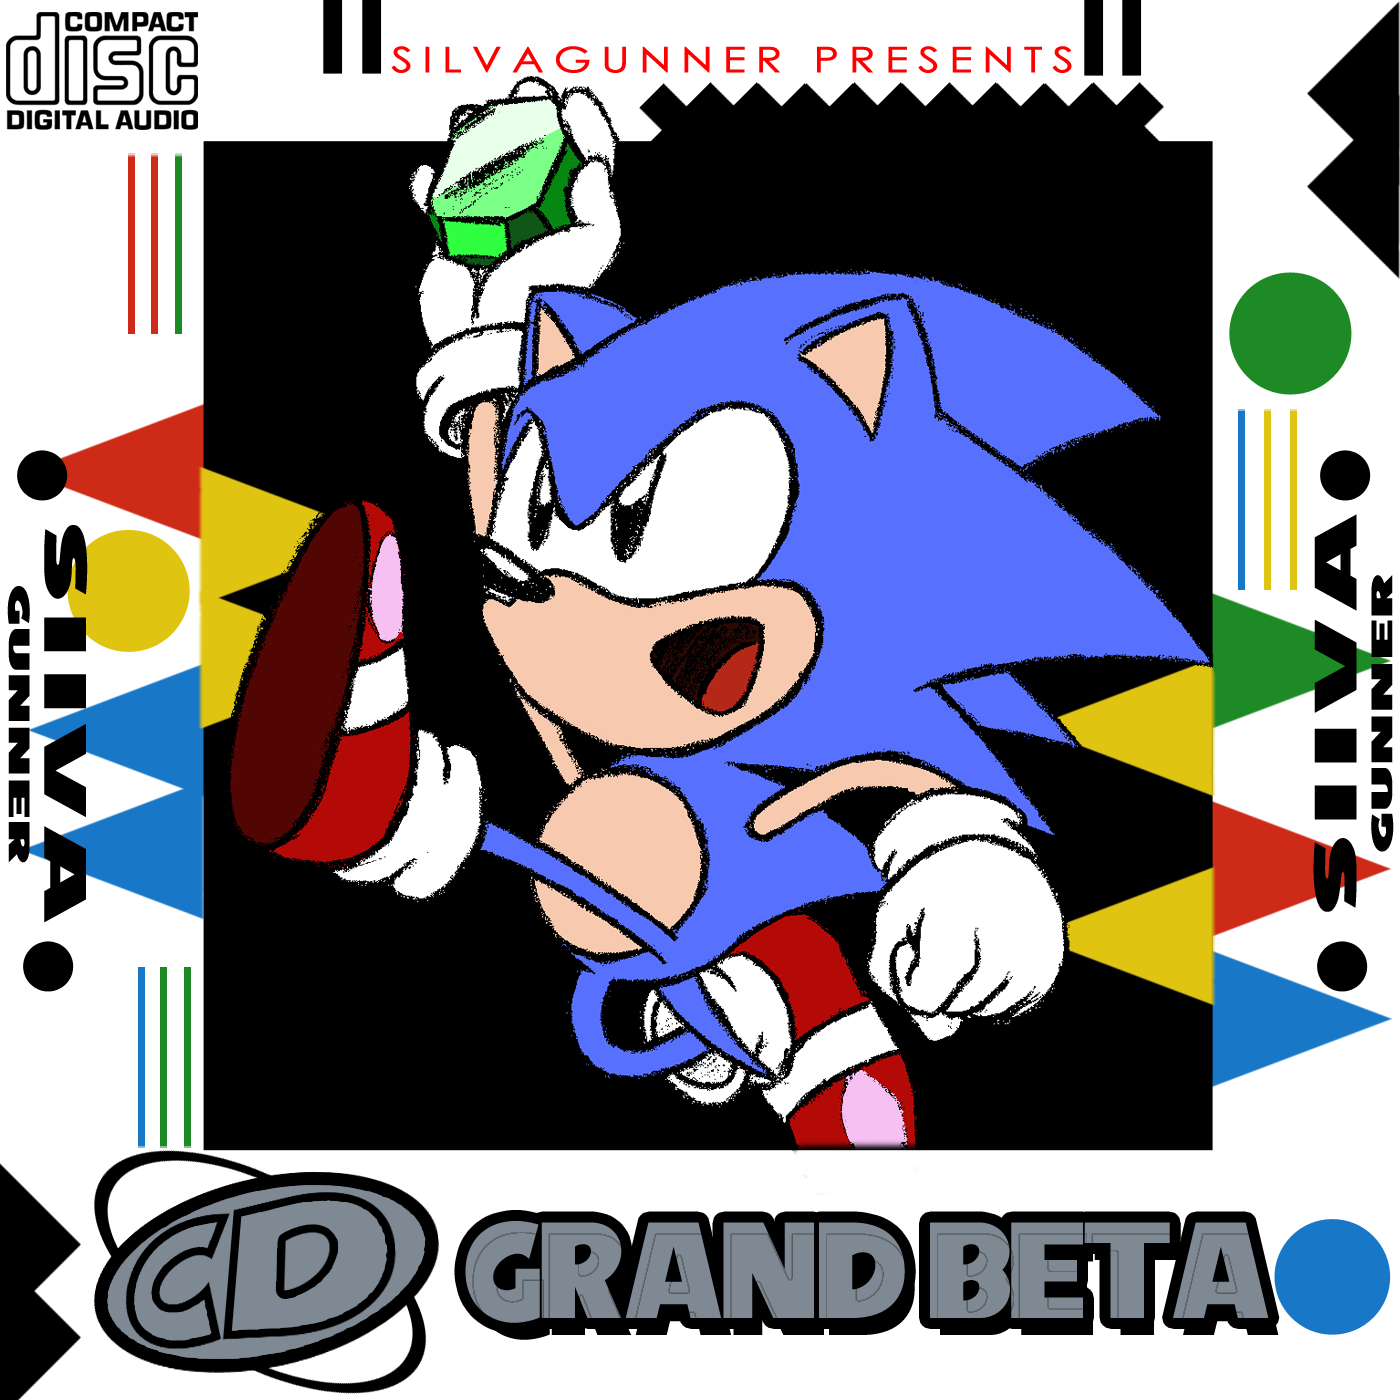 Sonic CD - Restored Beta Loop Soundtrack (2022) MP3 - Download